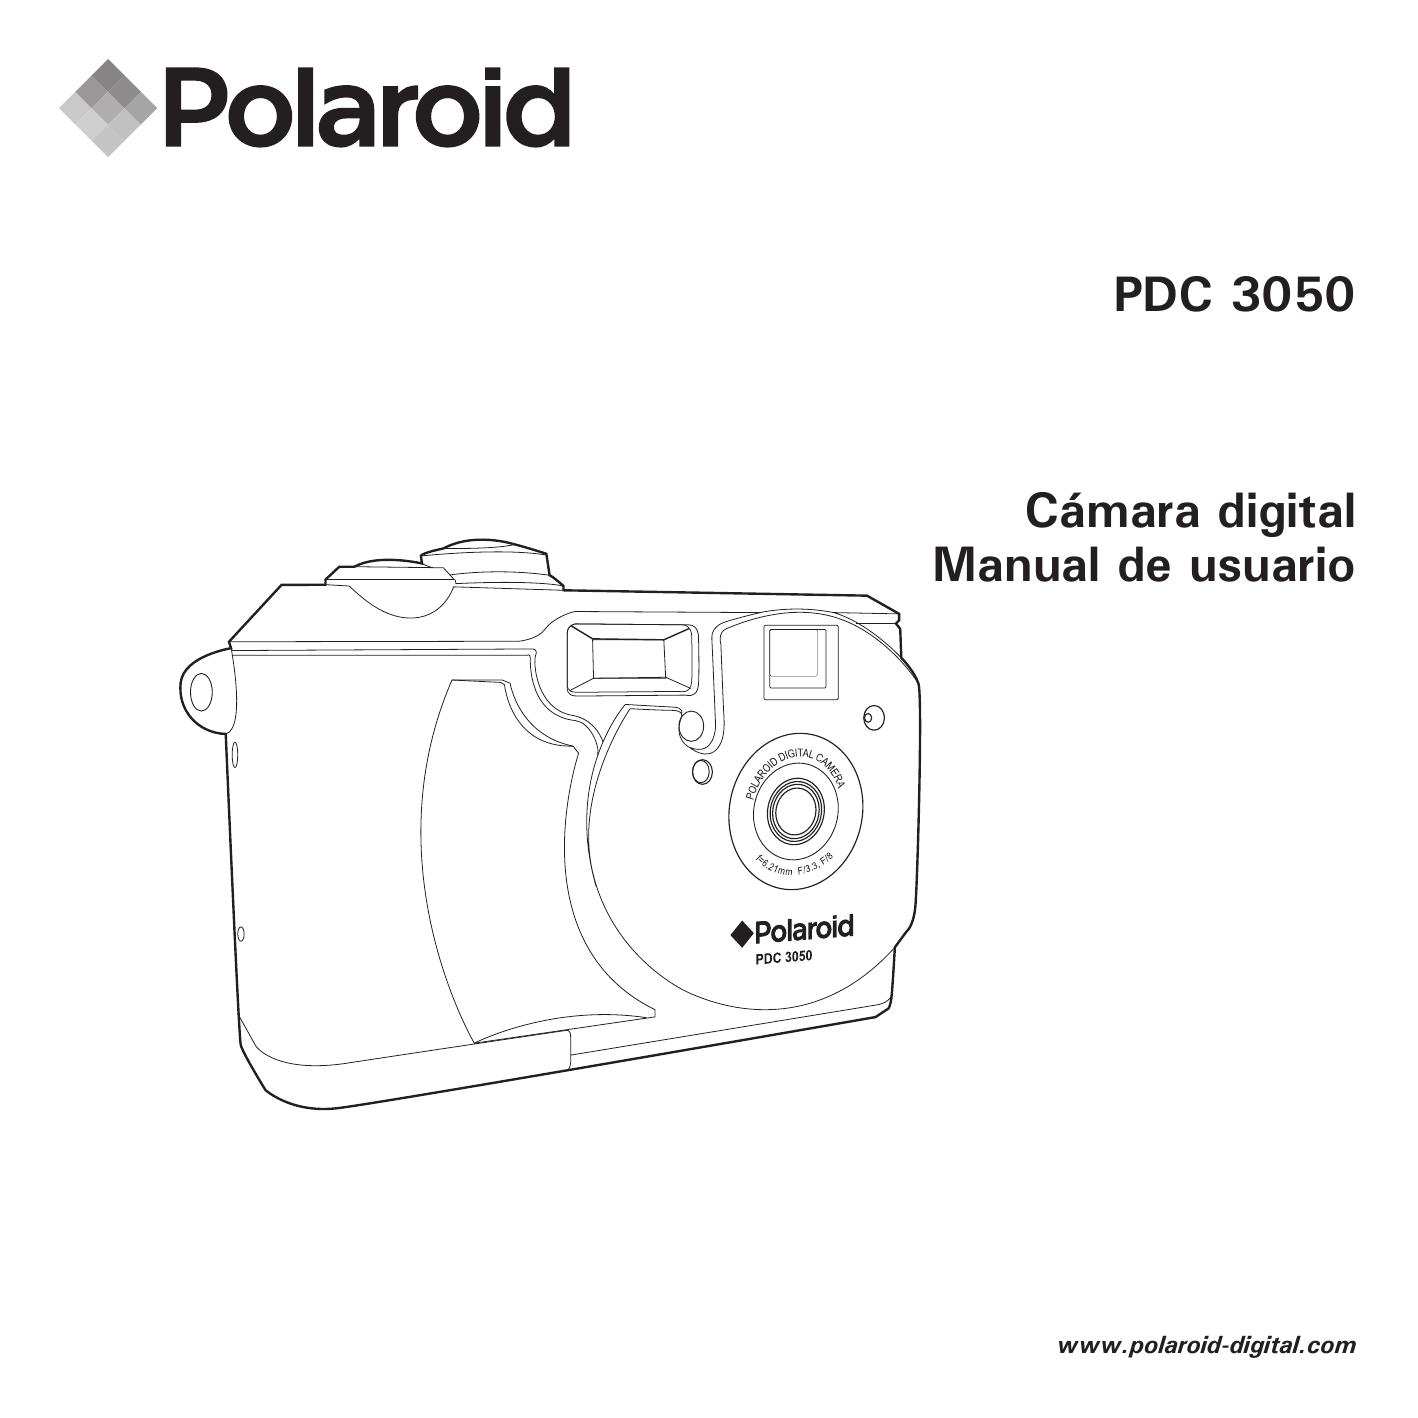 Polaroid PDC 3050 Camcorder User Manual